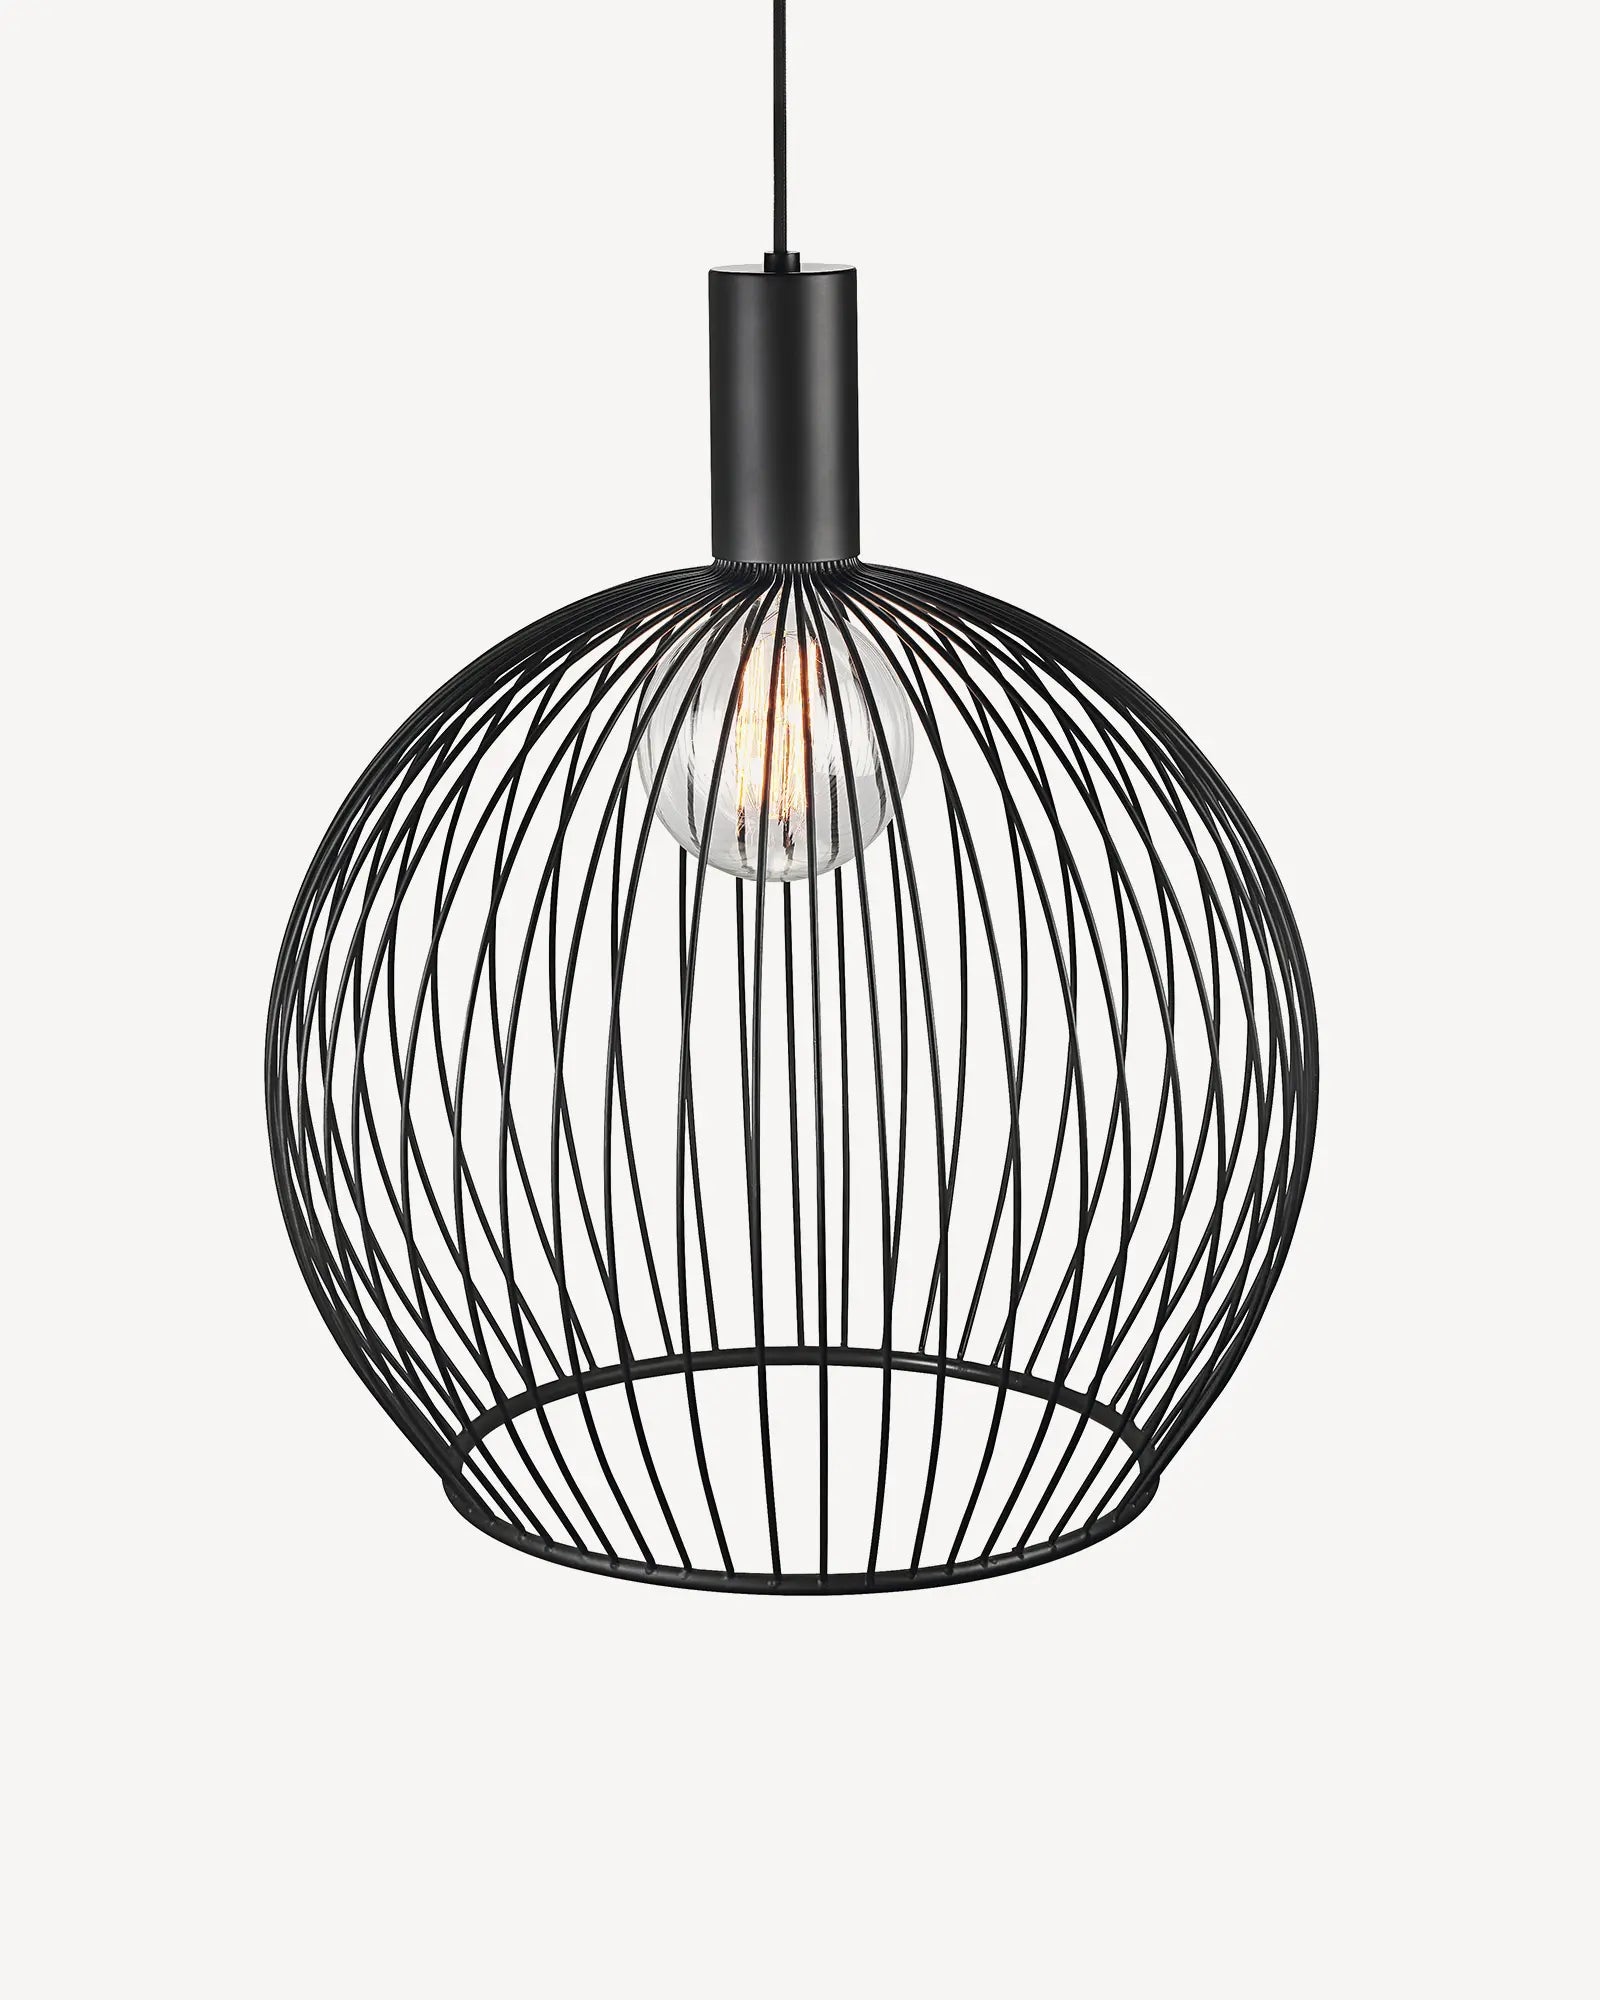 Aver bird cage Scandinavian pendant light 50cm